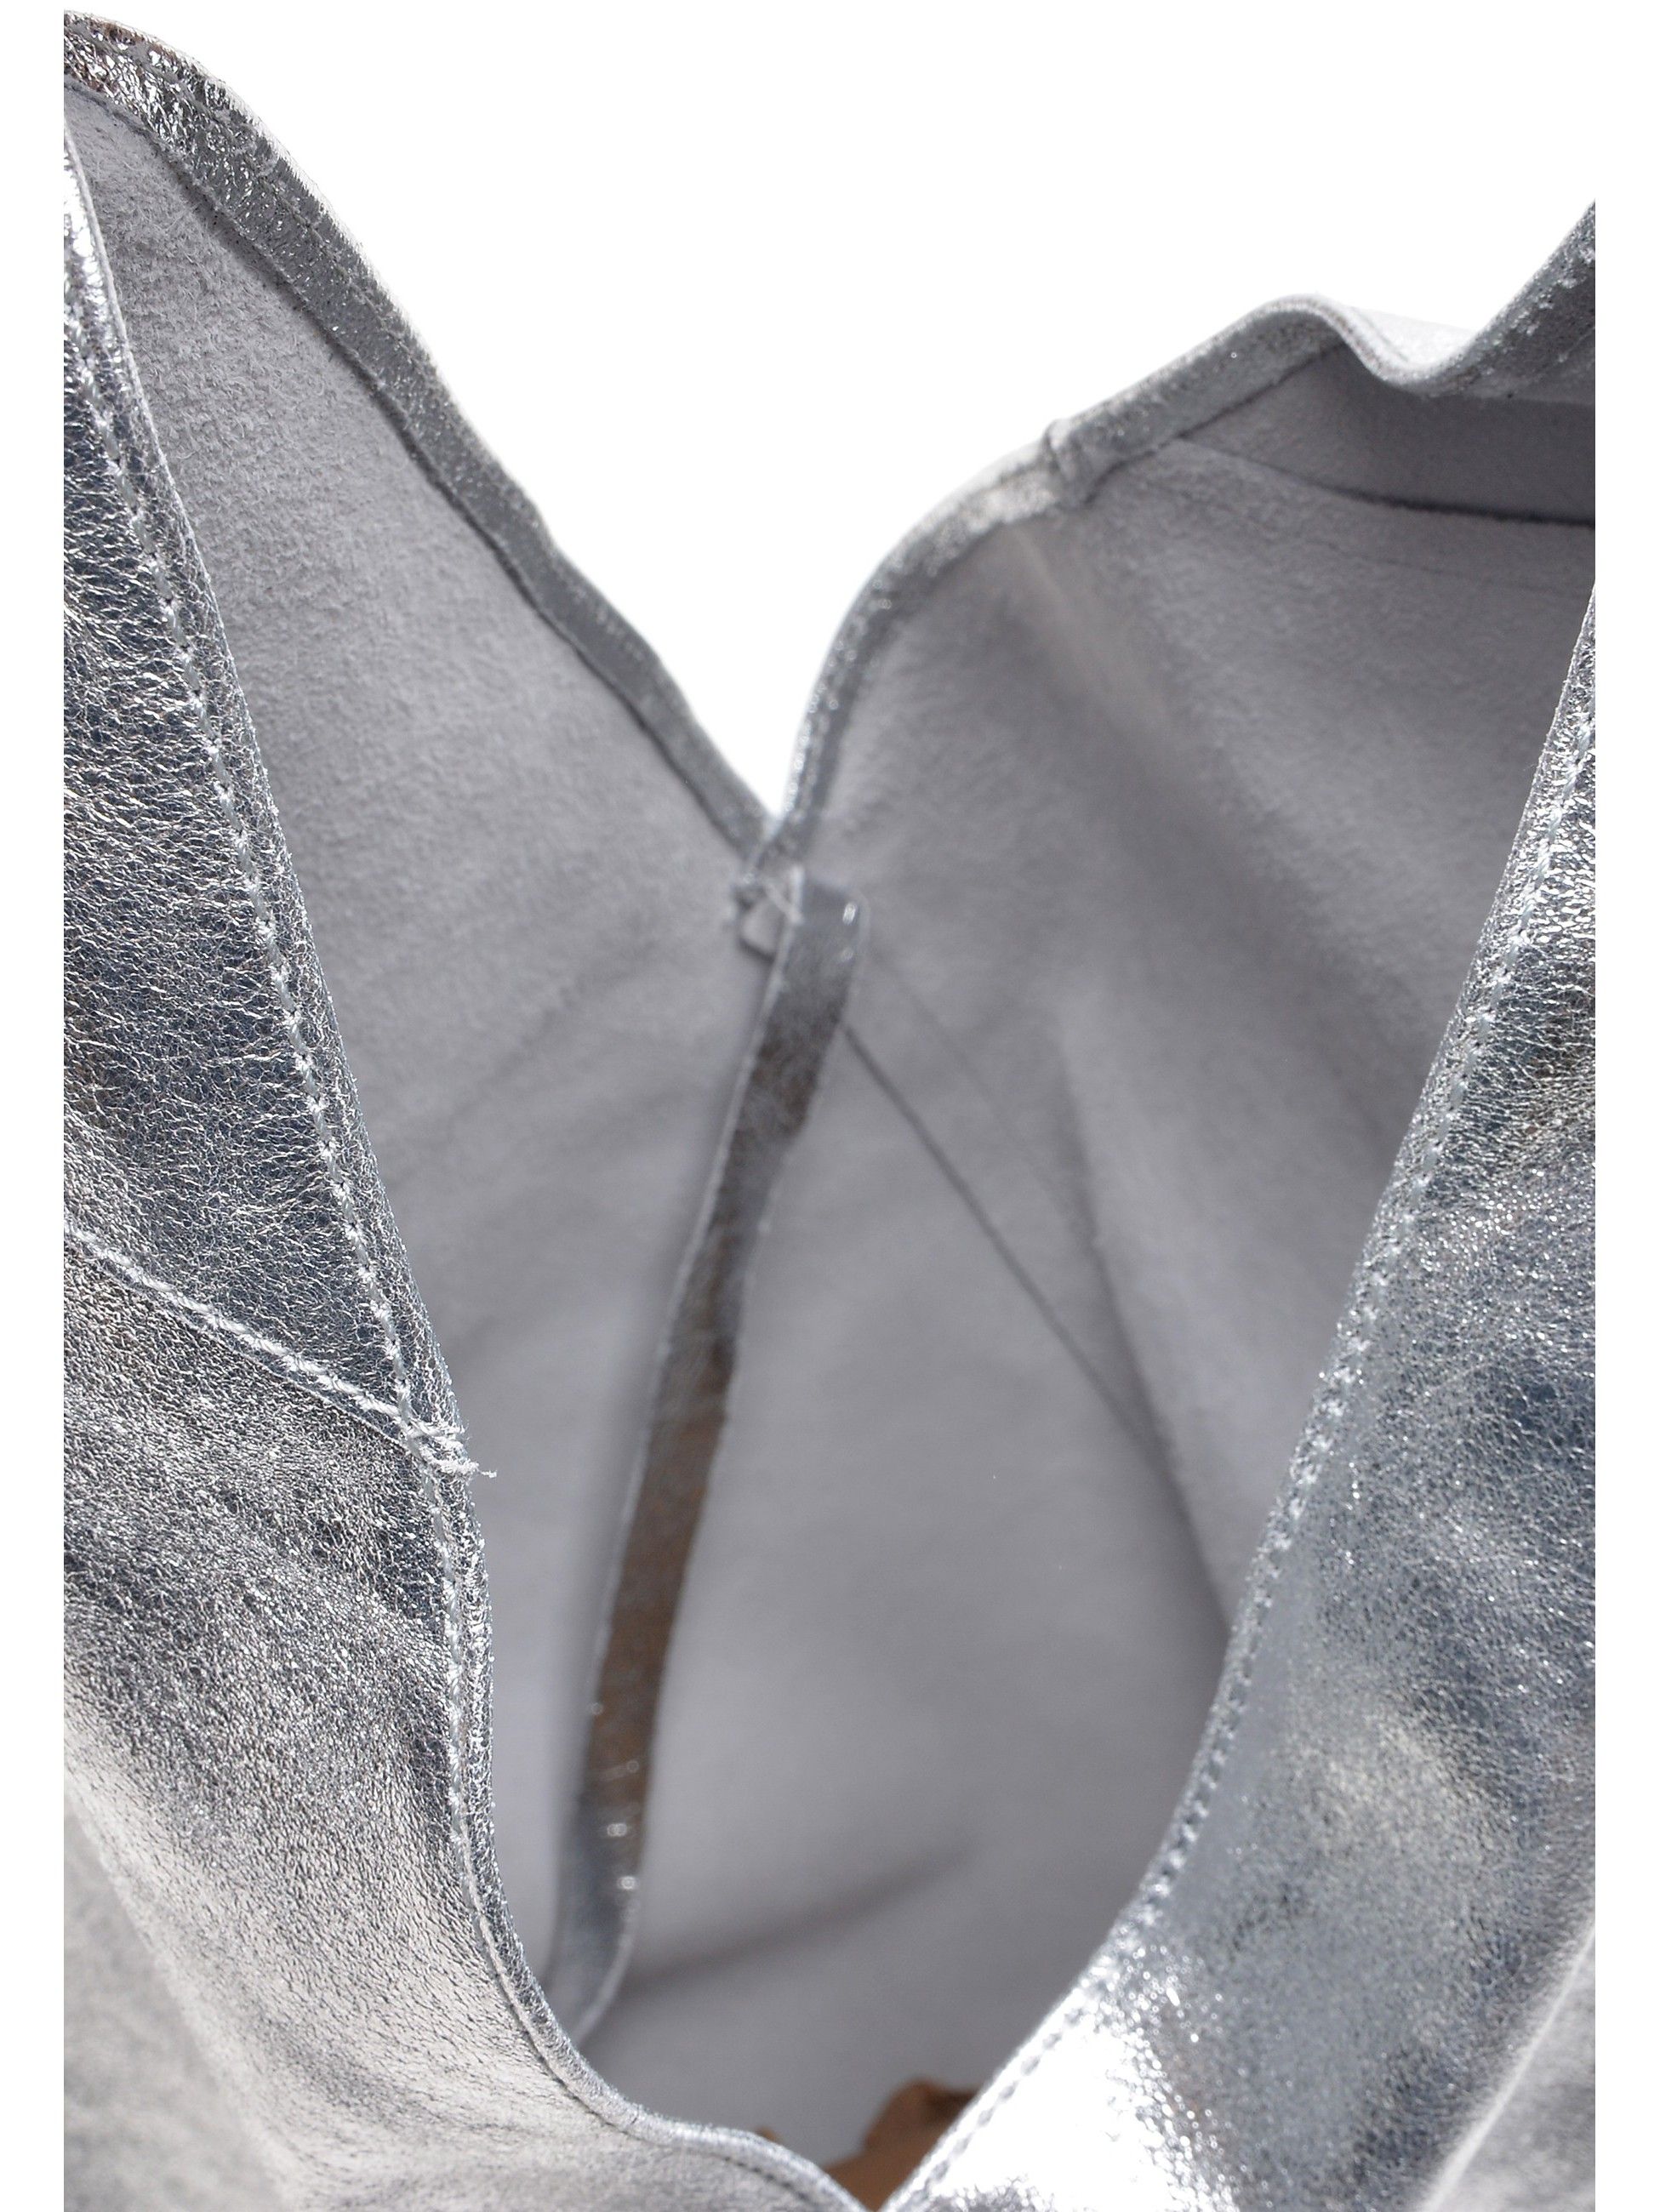 Shopper bag
100% cow leather
Single top handle: 26 cm
Internal wallet with zip closure 
Dimensions: 37x46x/ cm